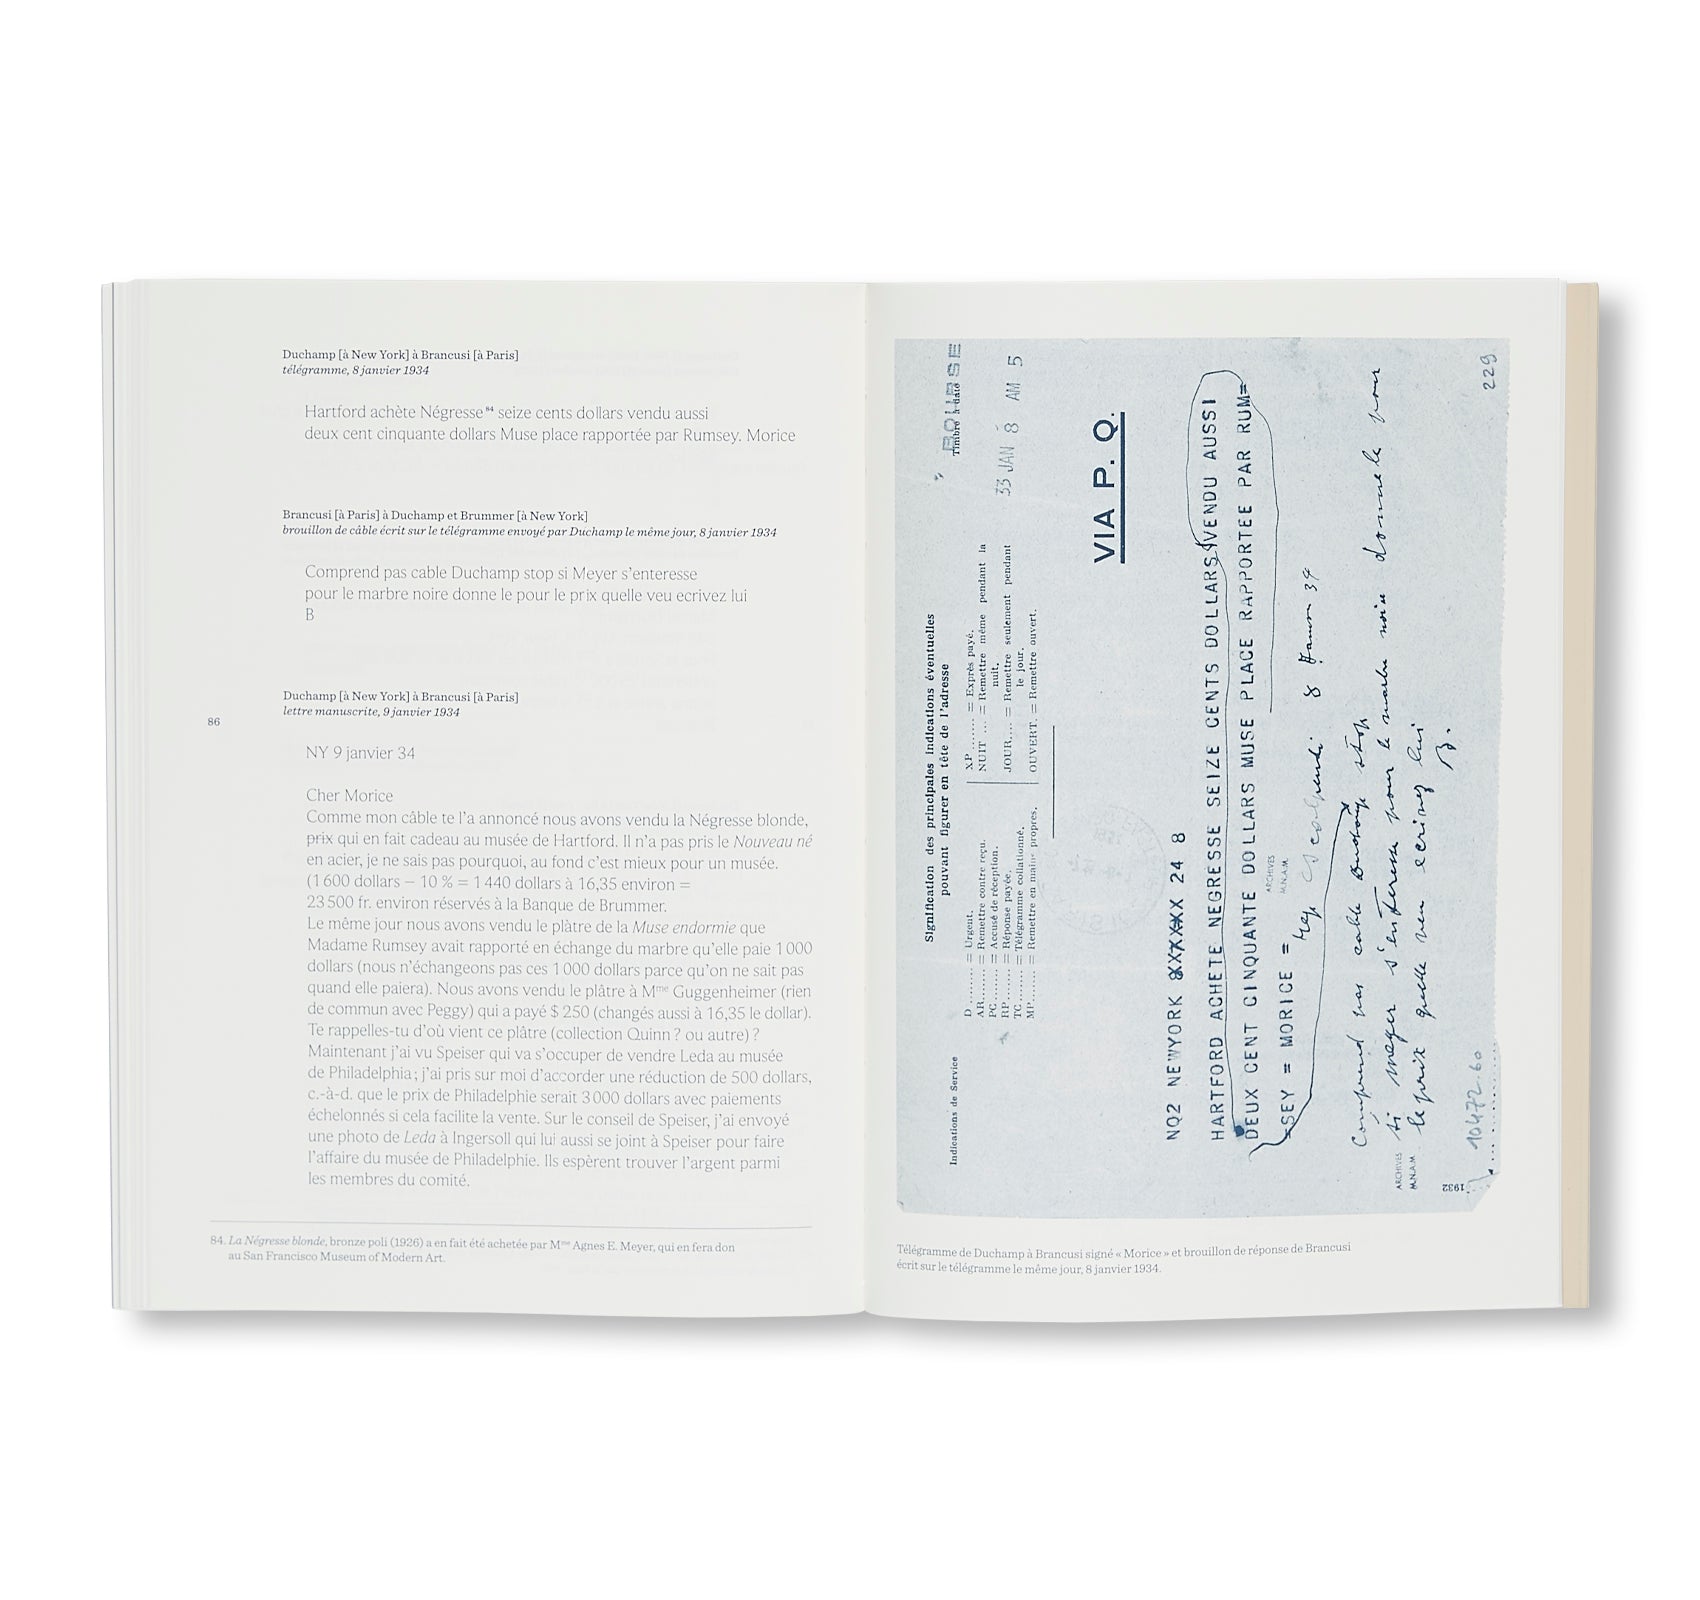 CORRESPONDANCE BRANCUSI DUCHAMP by Constantin Brancusi, Marcel Duchamp